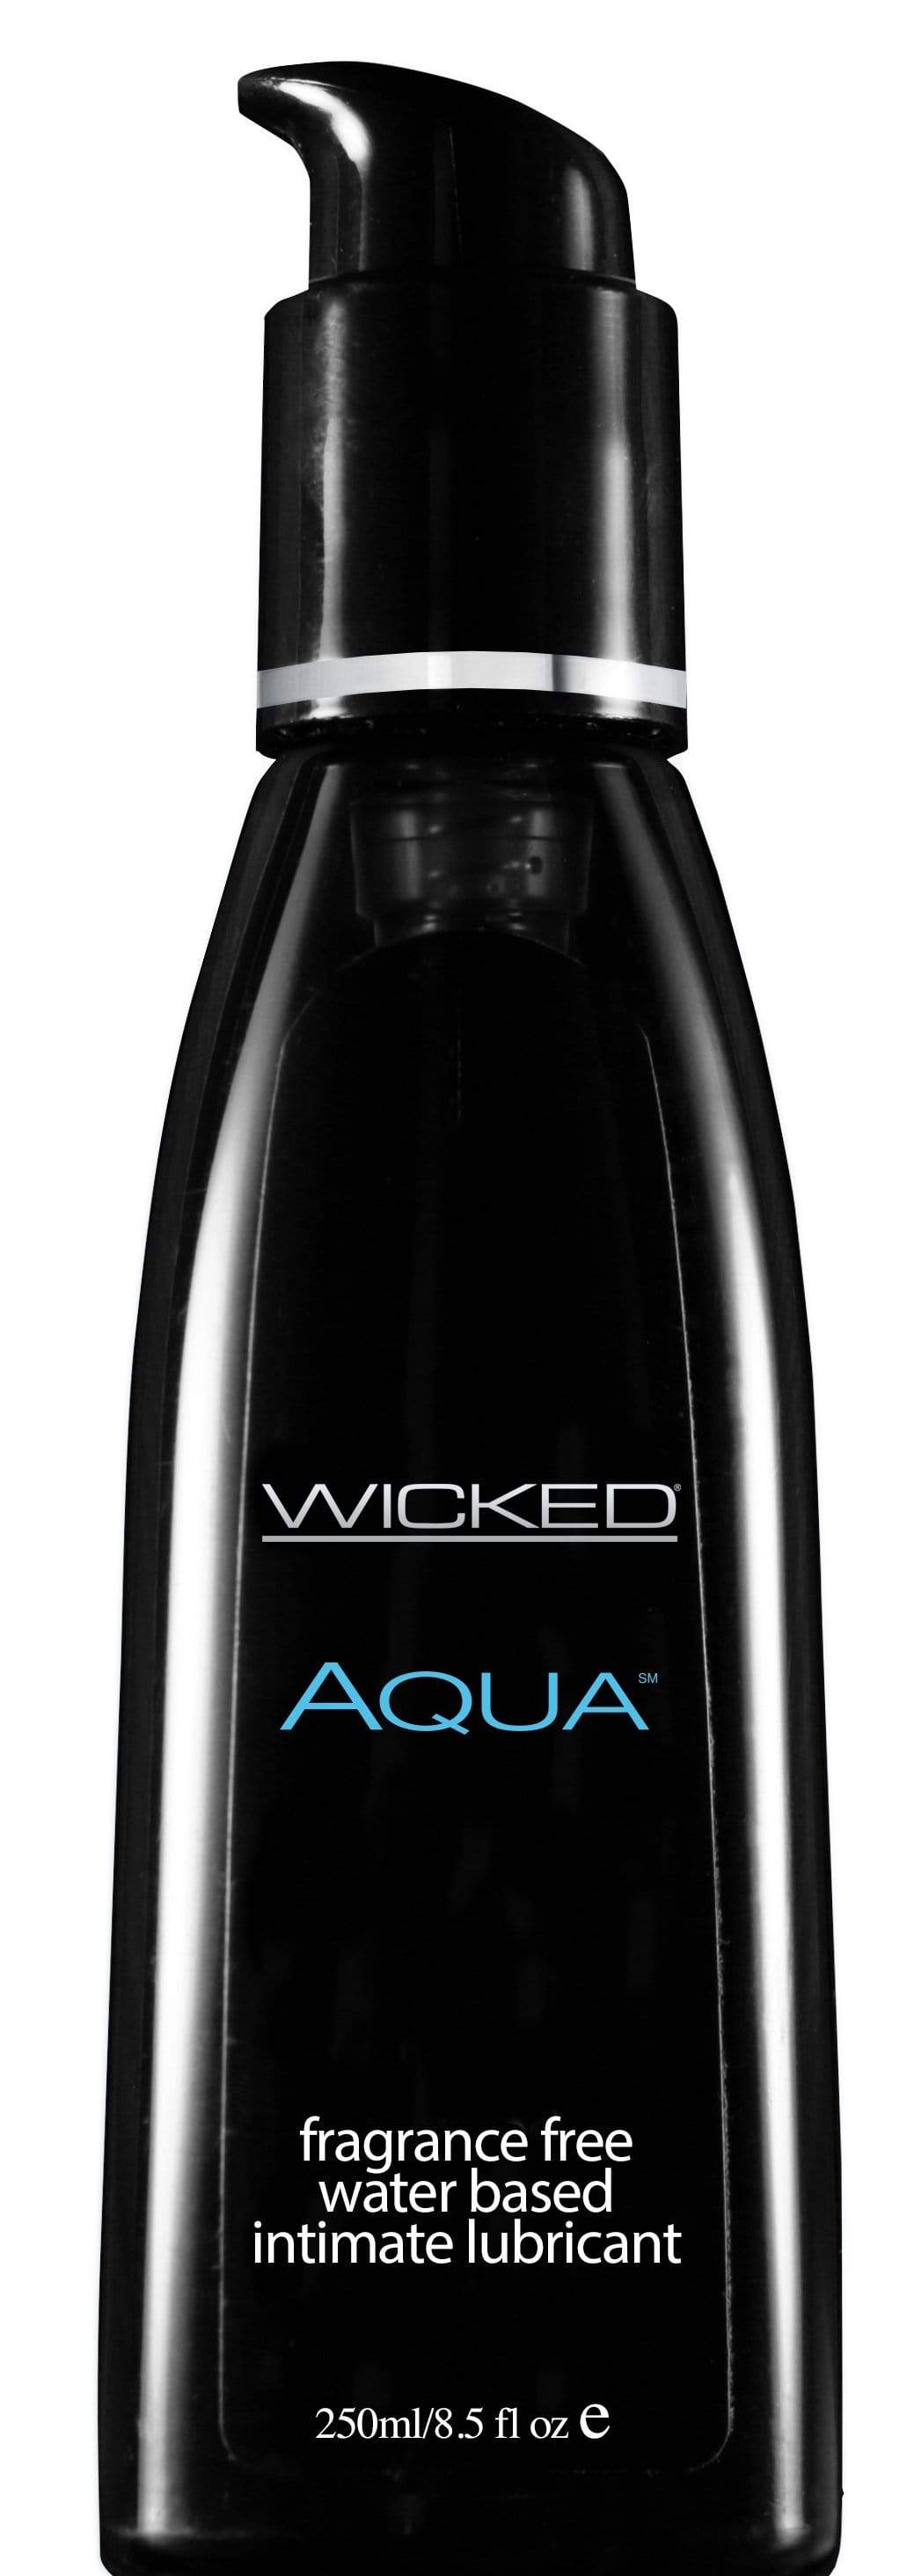 wicked aqua fragrance free water based lubricant 8 5 fl oz 250 ml